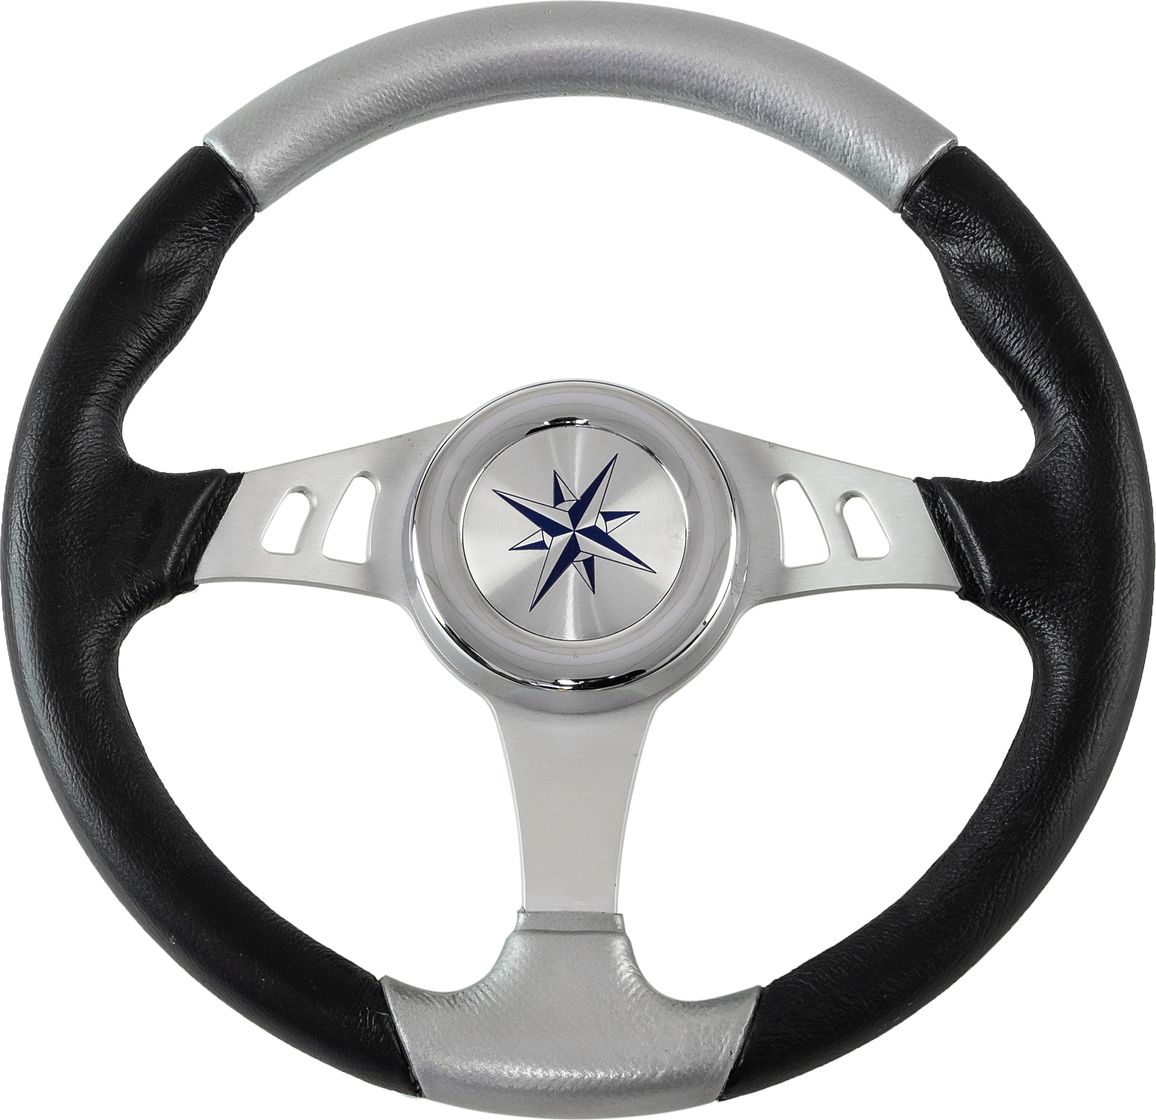 Рулевое колесо SKIPPER обод черносеребристый, спицы серебряные д. 350 мм VN835001-93 рулевое колесо delfino обод серый спицы серебряные д 310 мм vn70103 03